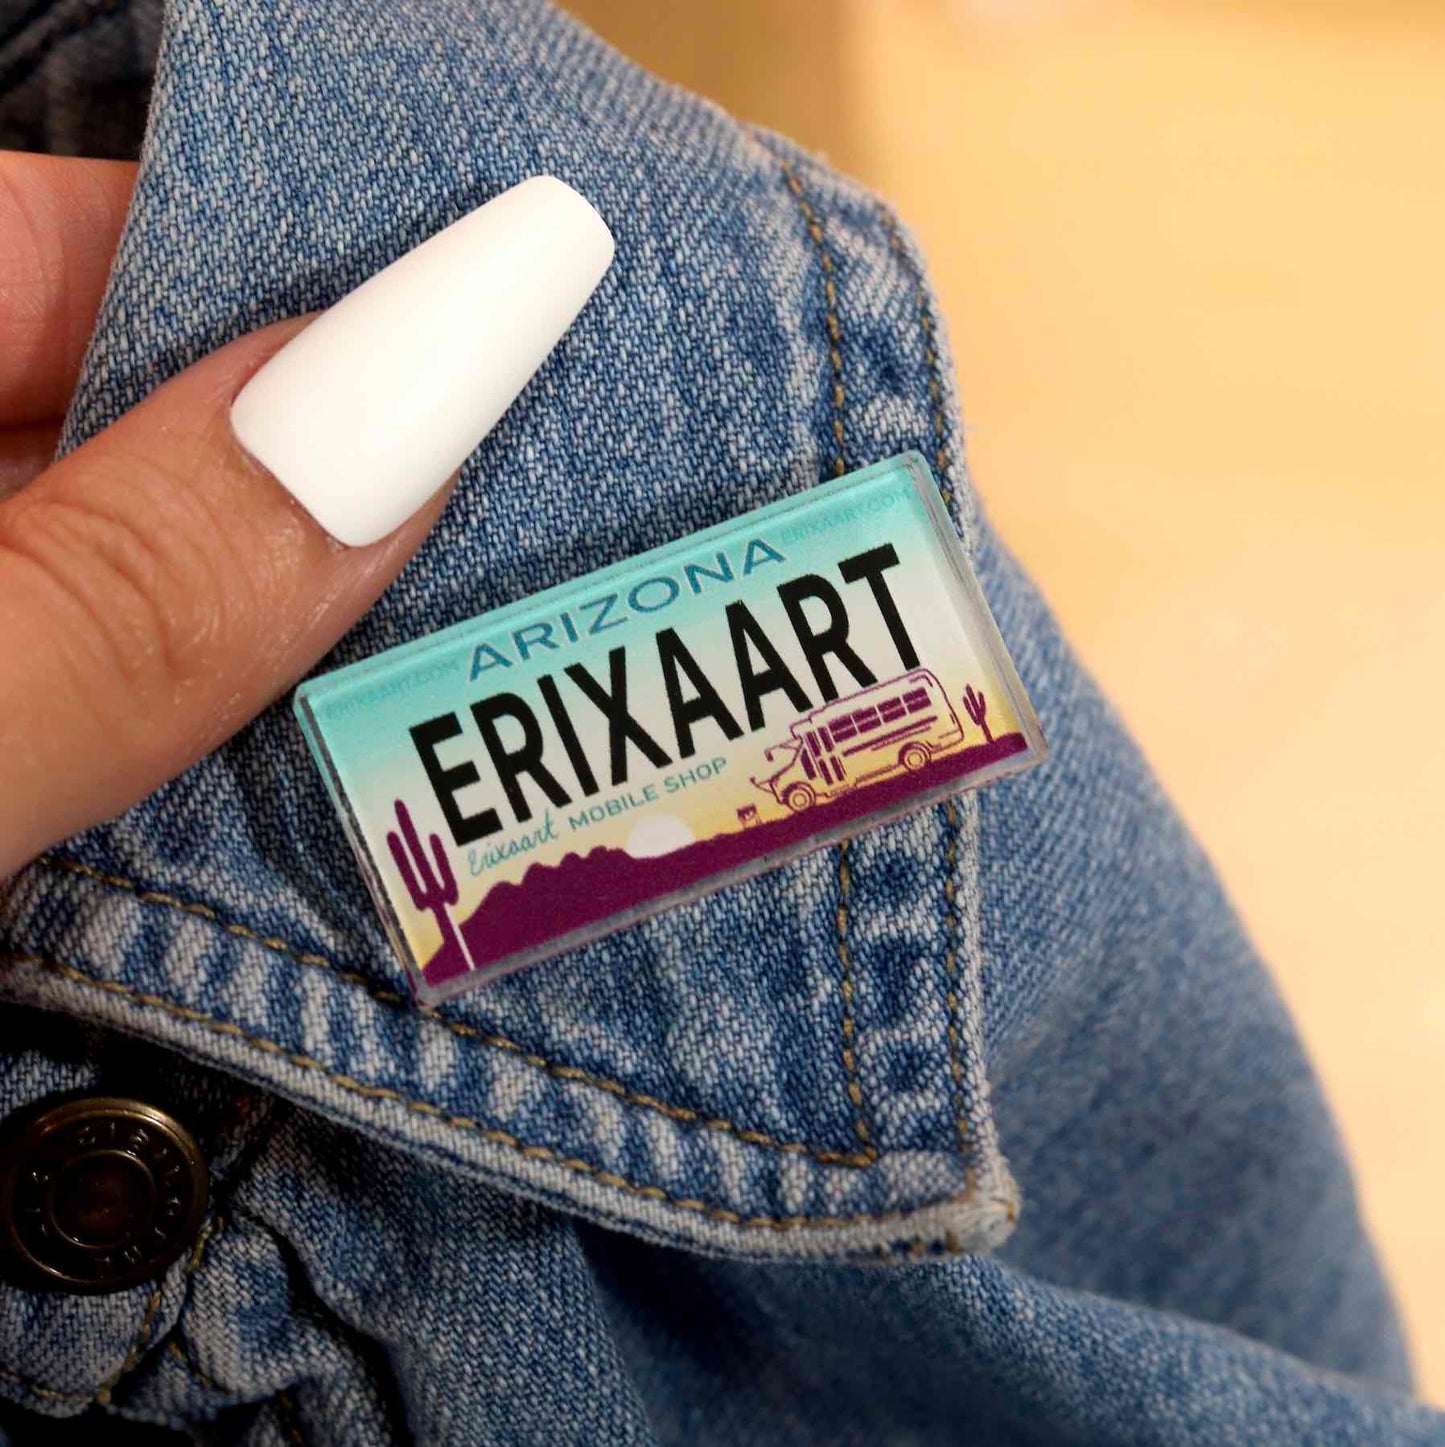 "Erixaart" Acrylic Pin